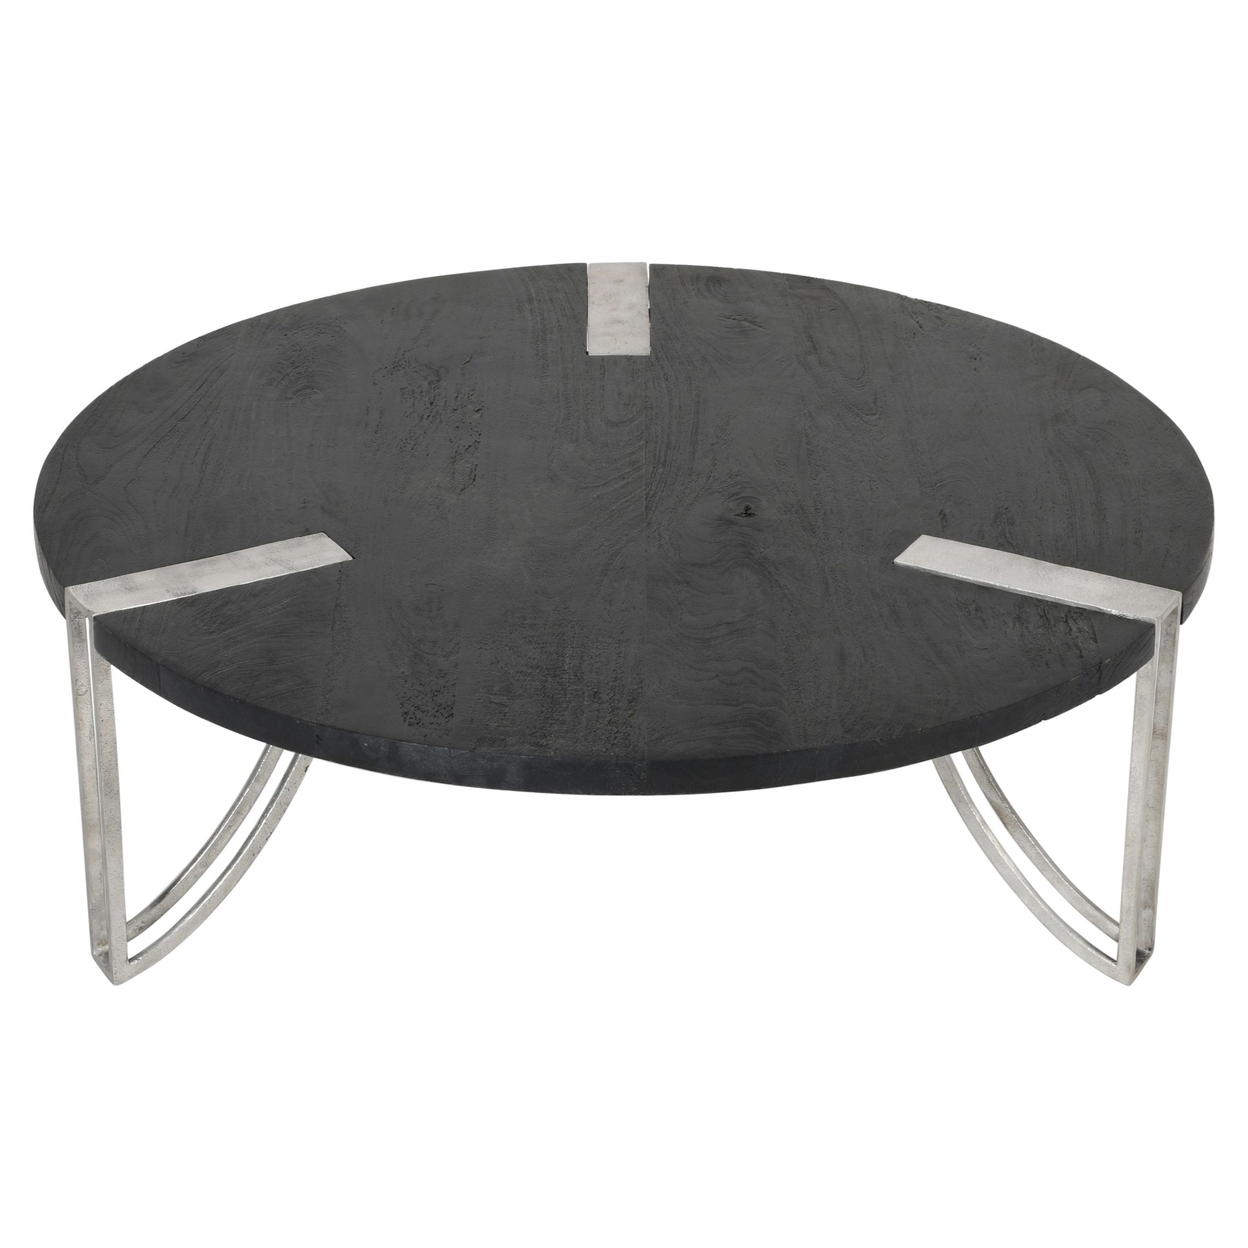 35 Inch Round Coffee Table, Sandblasted Matte Black Mango Wood Top, Curved Aluminium Legs, Antique Silver-Saltoro Sherpi